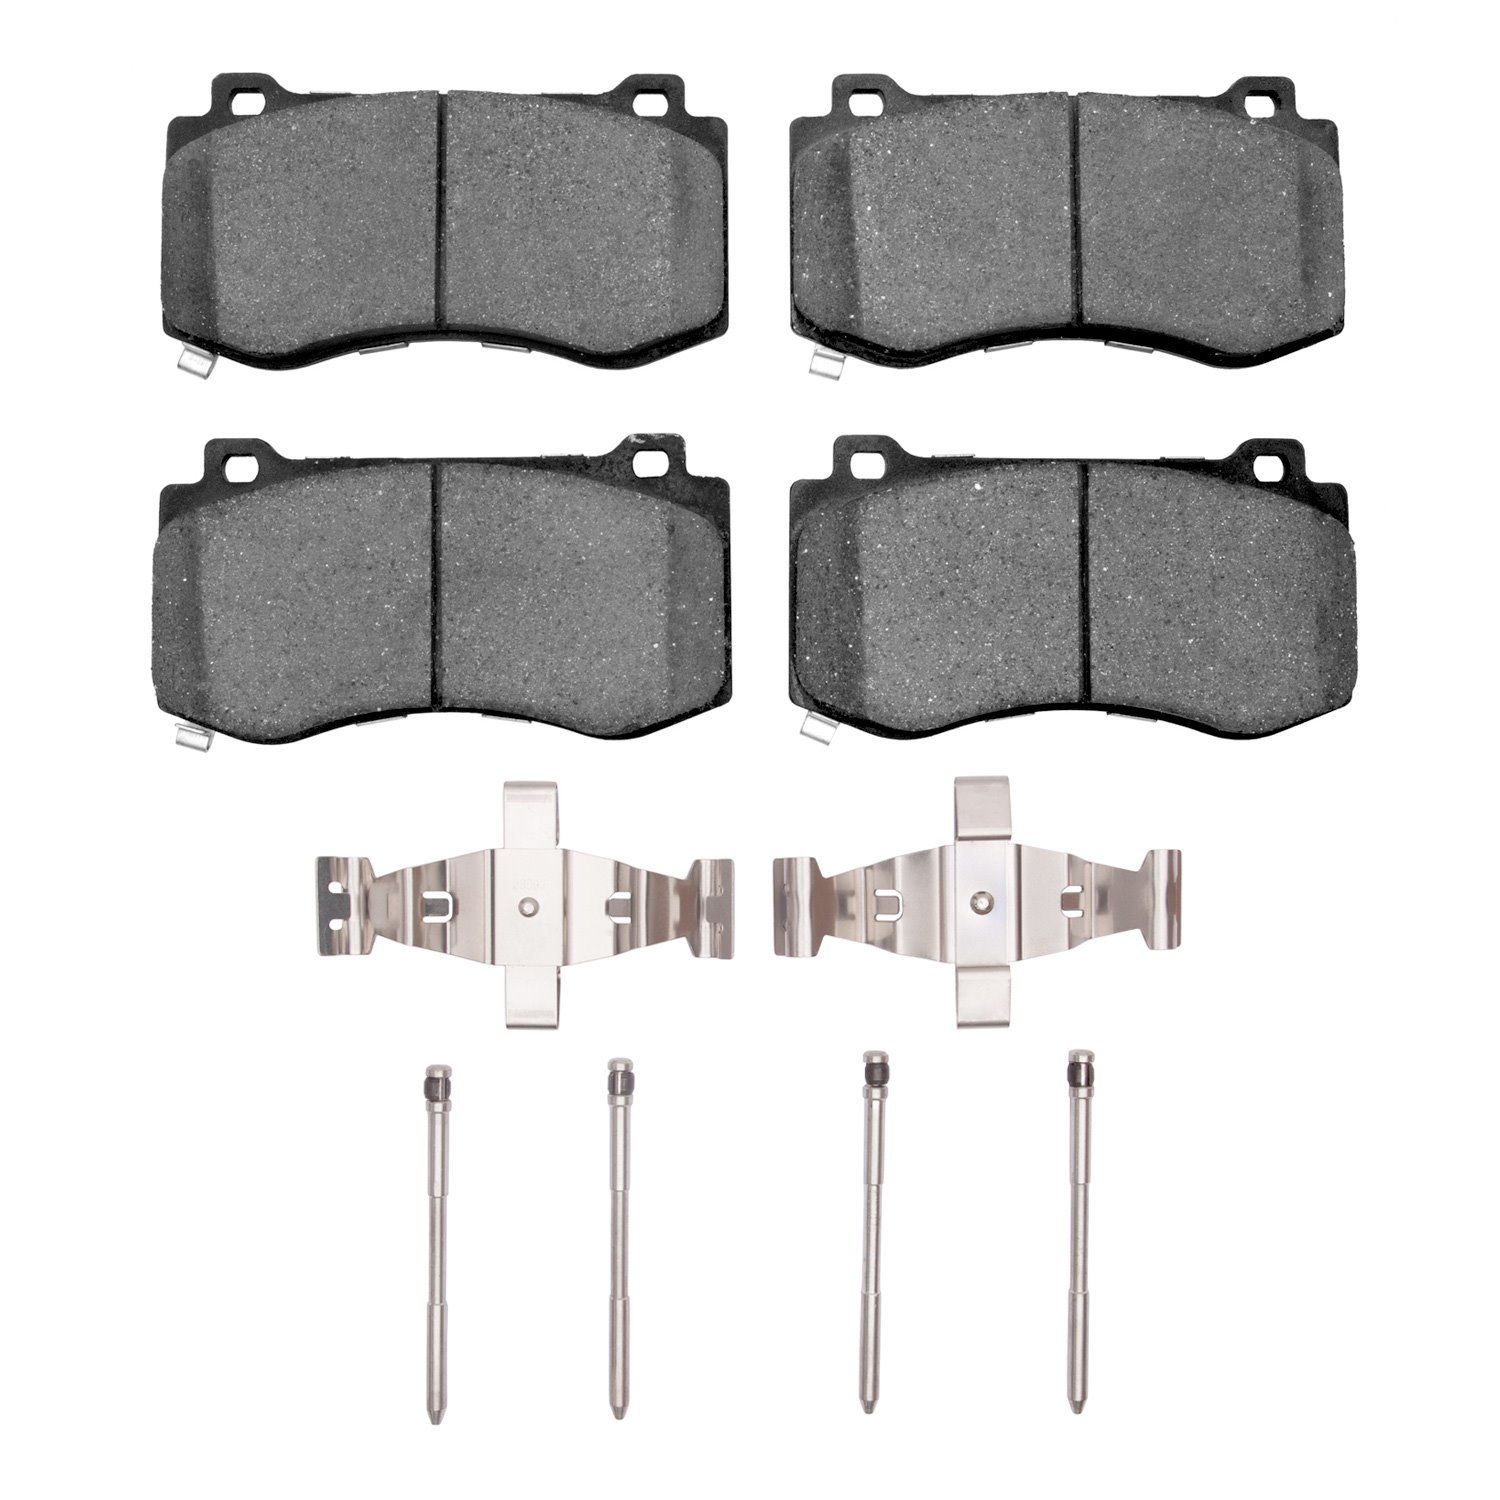 1310-1149-01 3000-Series Ceramic Brake Pads & Hardware Kit, Fits Select Mopar, Position: Front